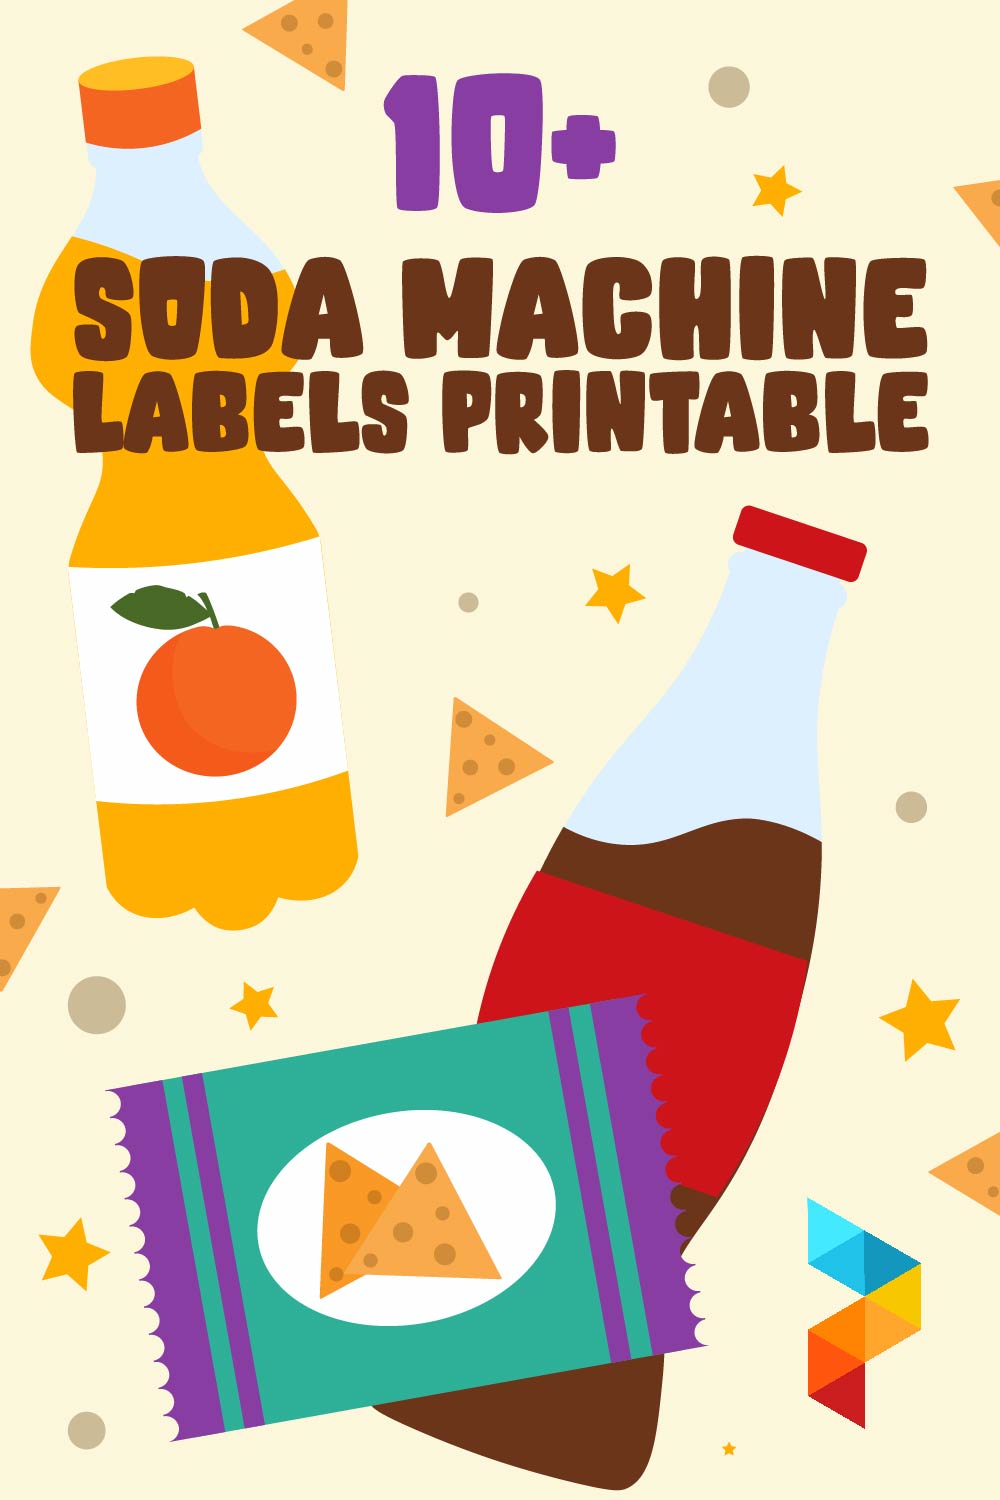 Soda Machine Labels